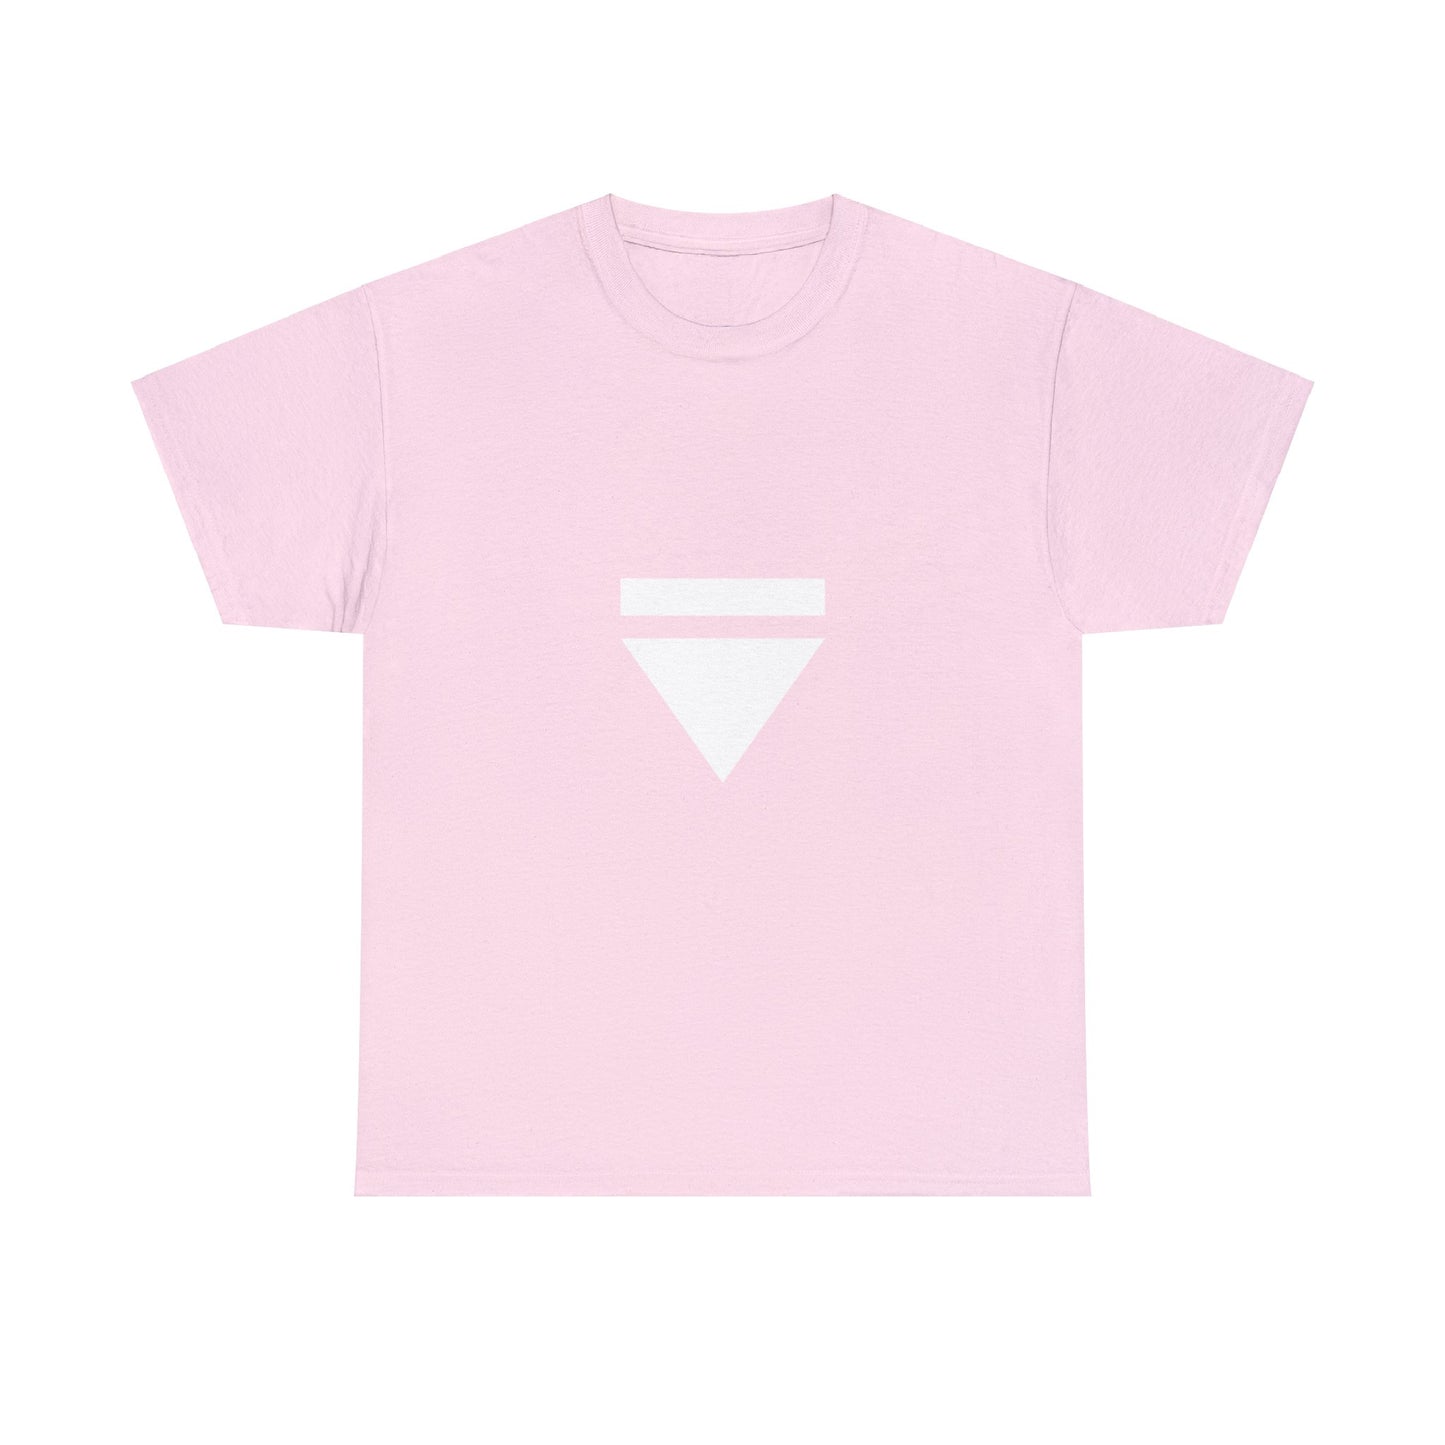 Newer Symbols Tom Vek EU pink T-shirt